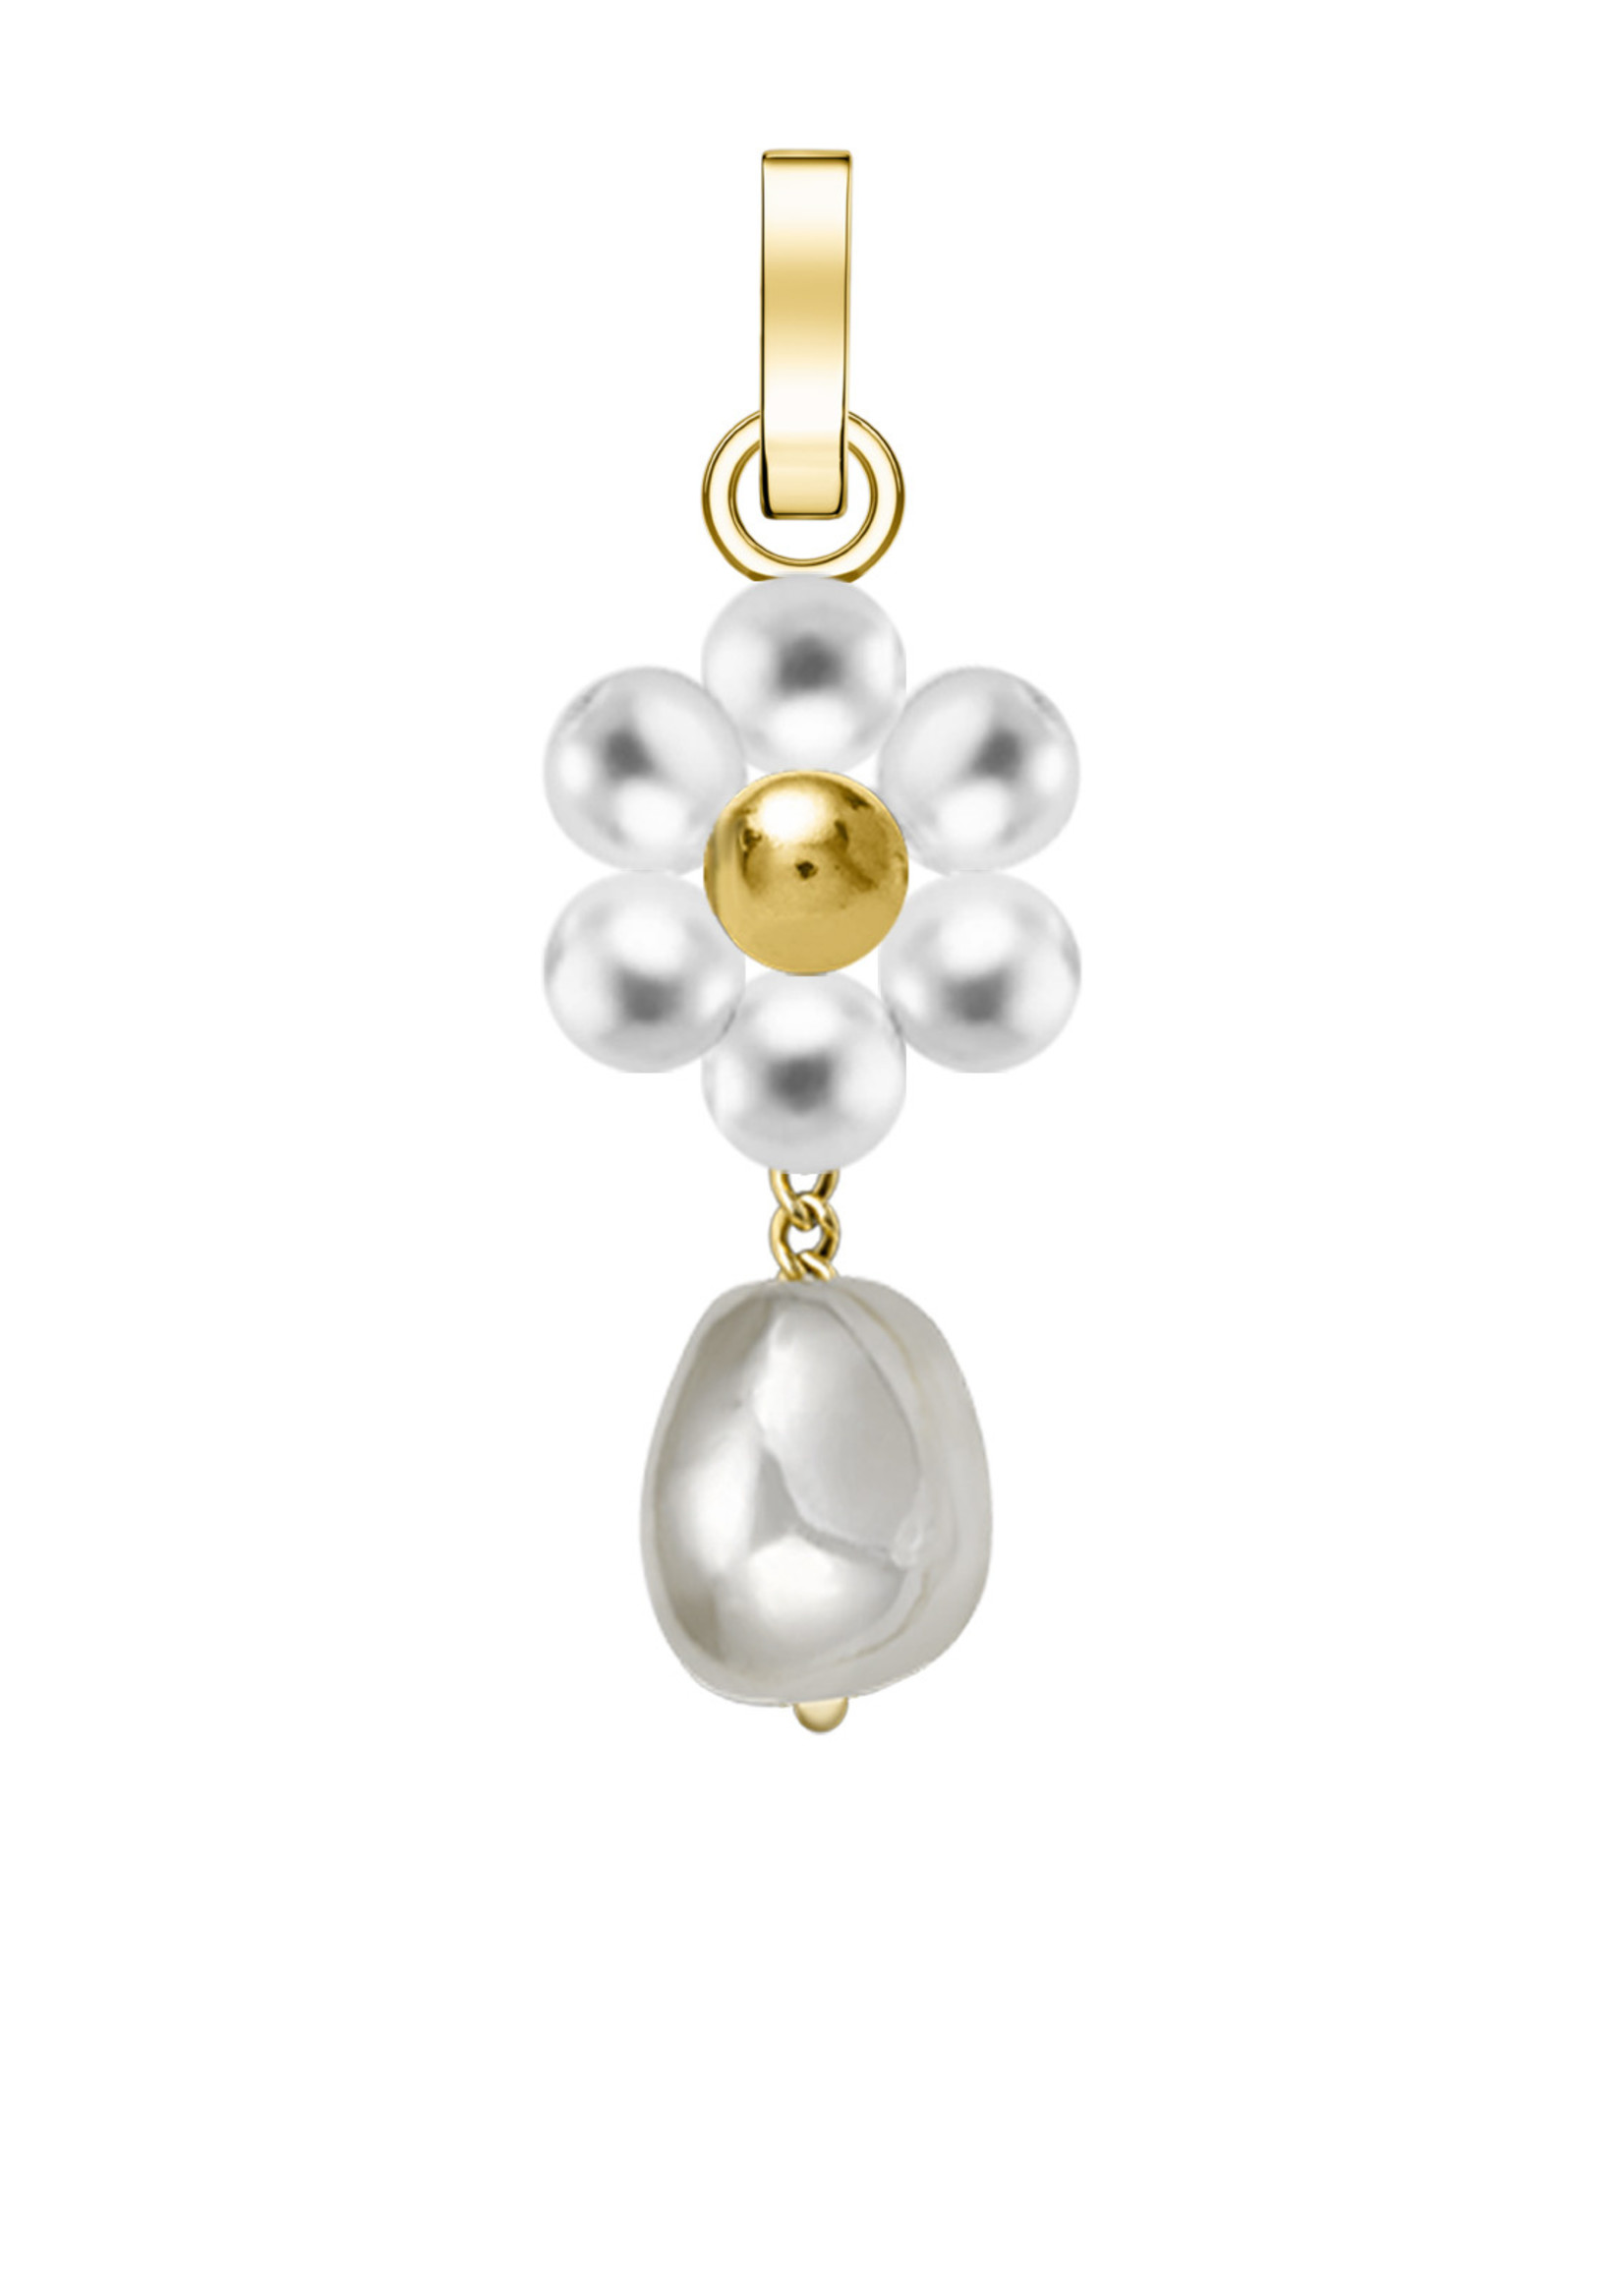 Rosefield Pendant Gold Daisy Flower Pearls